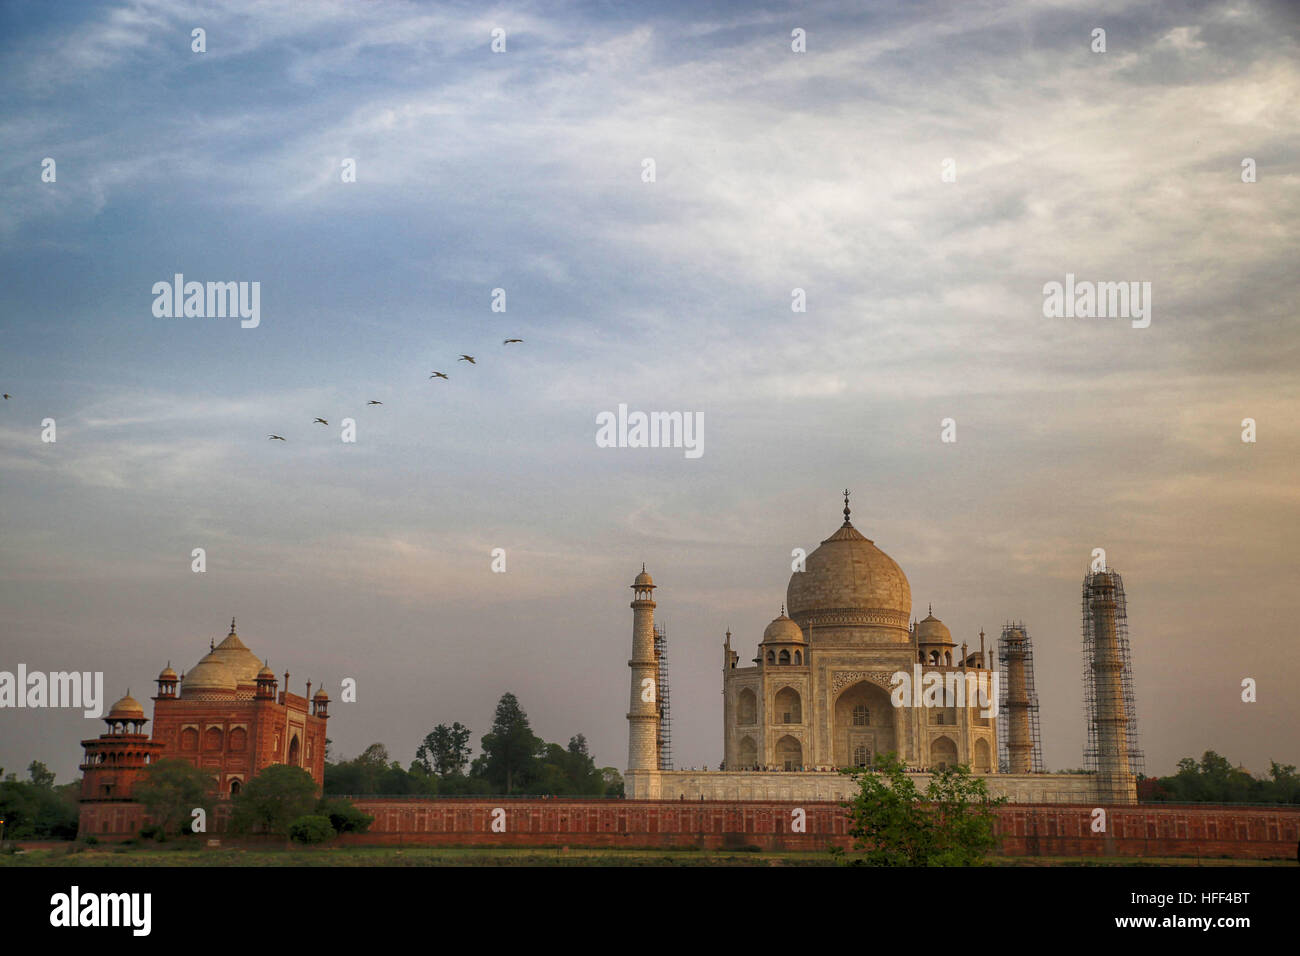 Taj Mahal - 25.04.2016 - Indien / Uttar Pradesh / Agra - Bilder von Taj Mahal bei Sonnenaufgang und Sonnenuntergang - Sandrine Huet / Le Pictorium Stockfoto